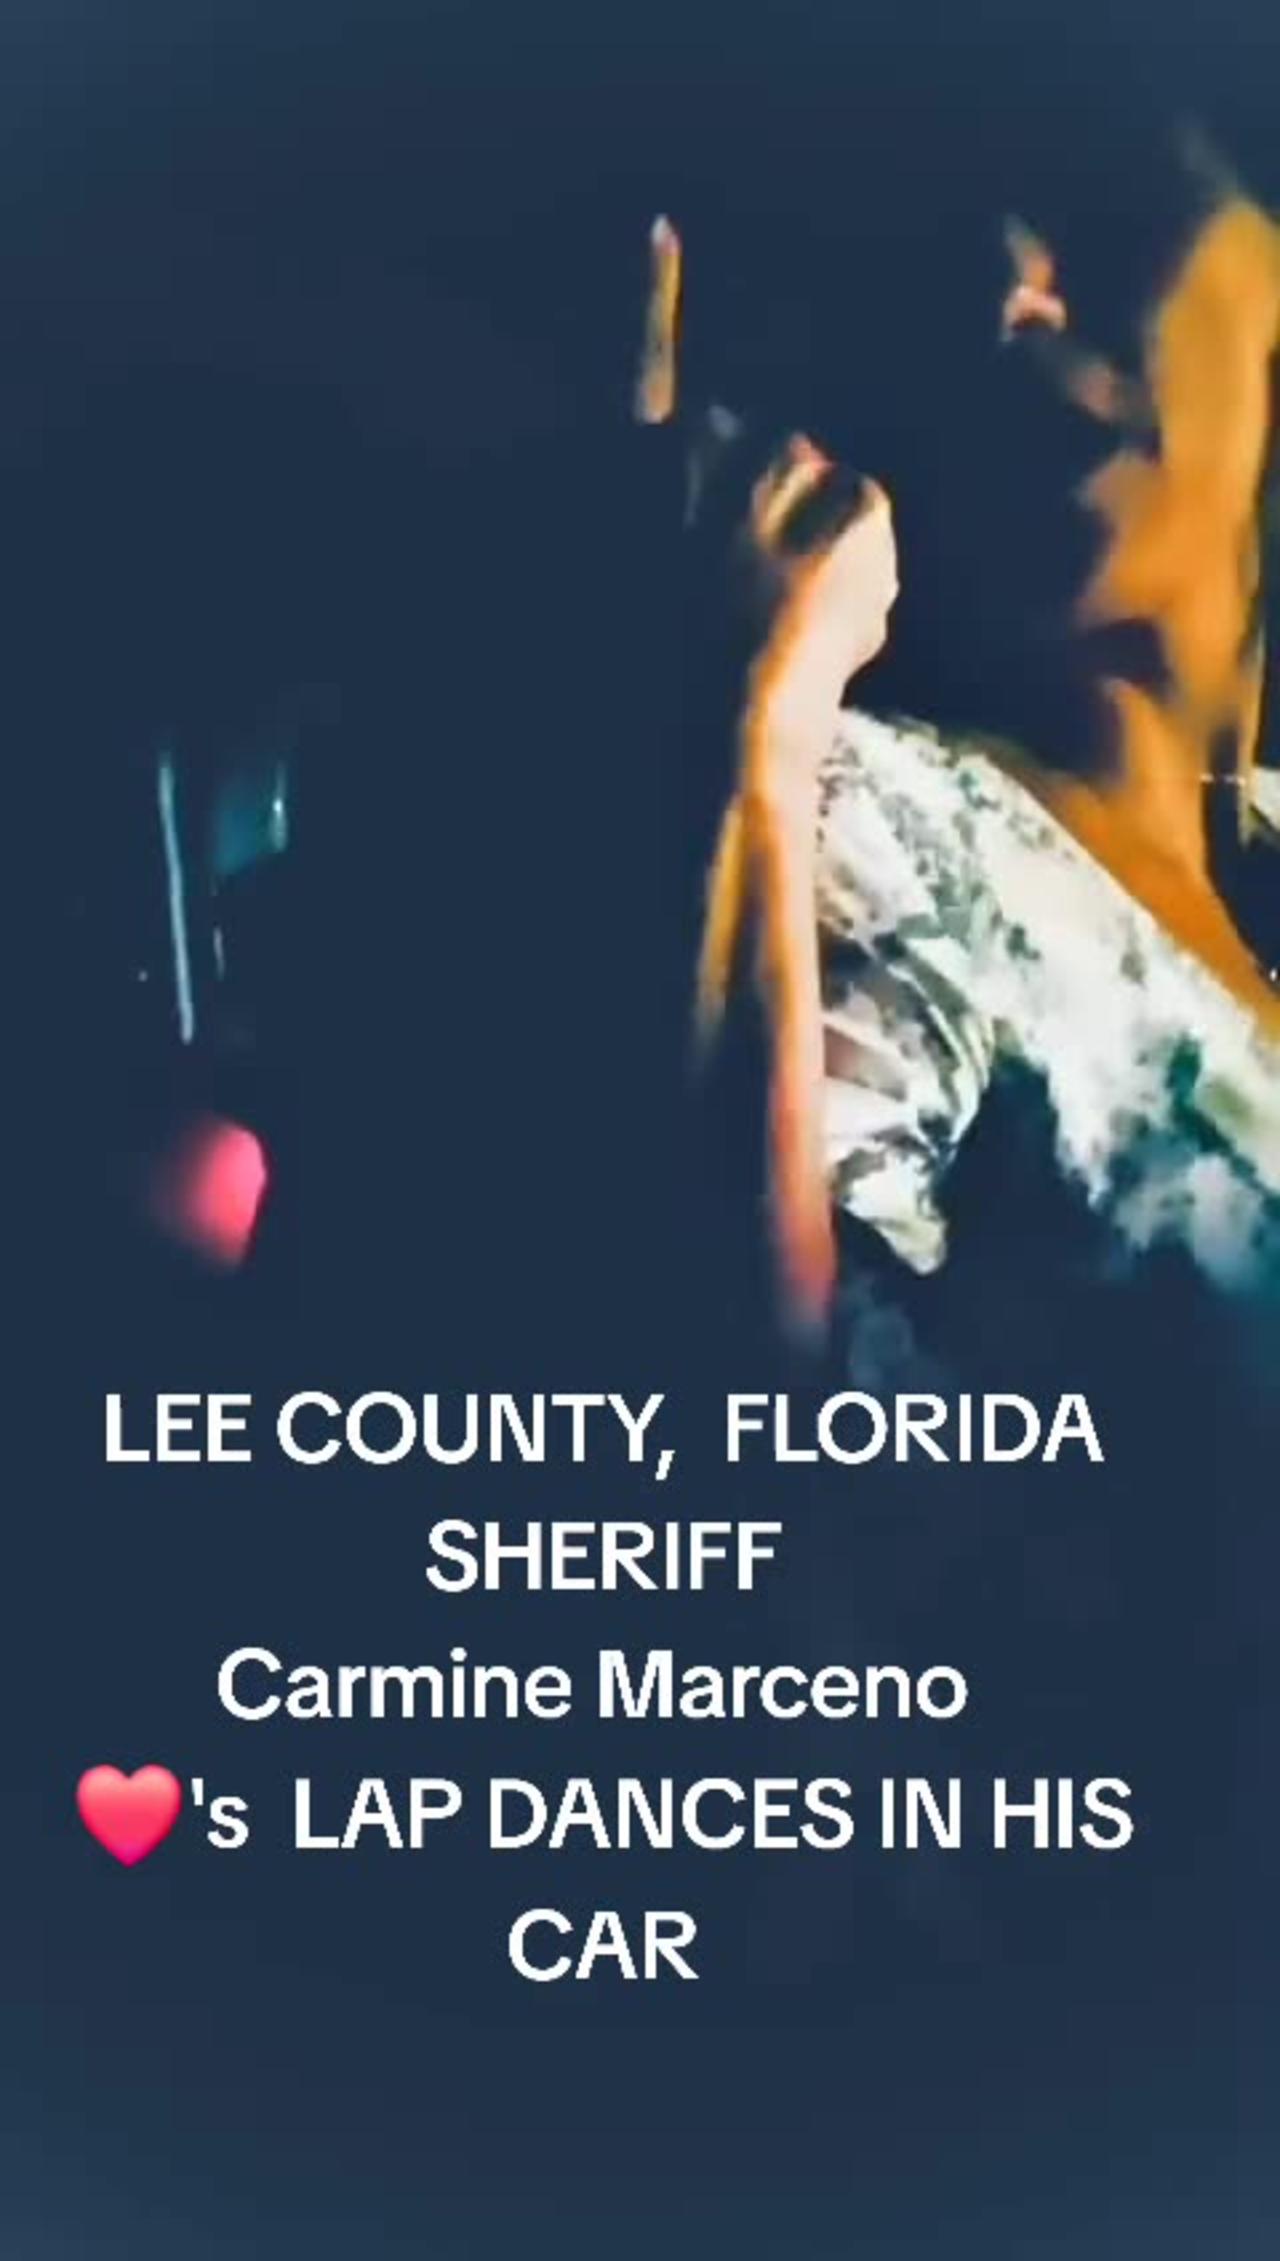 Criminal Lee County Sheriff Carmine Marceno Gets Lapdance In His Car